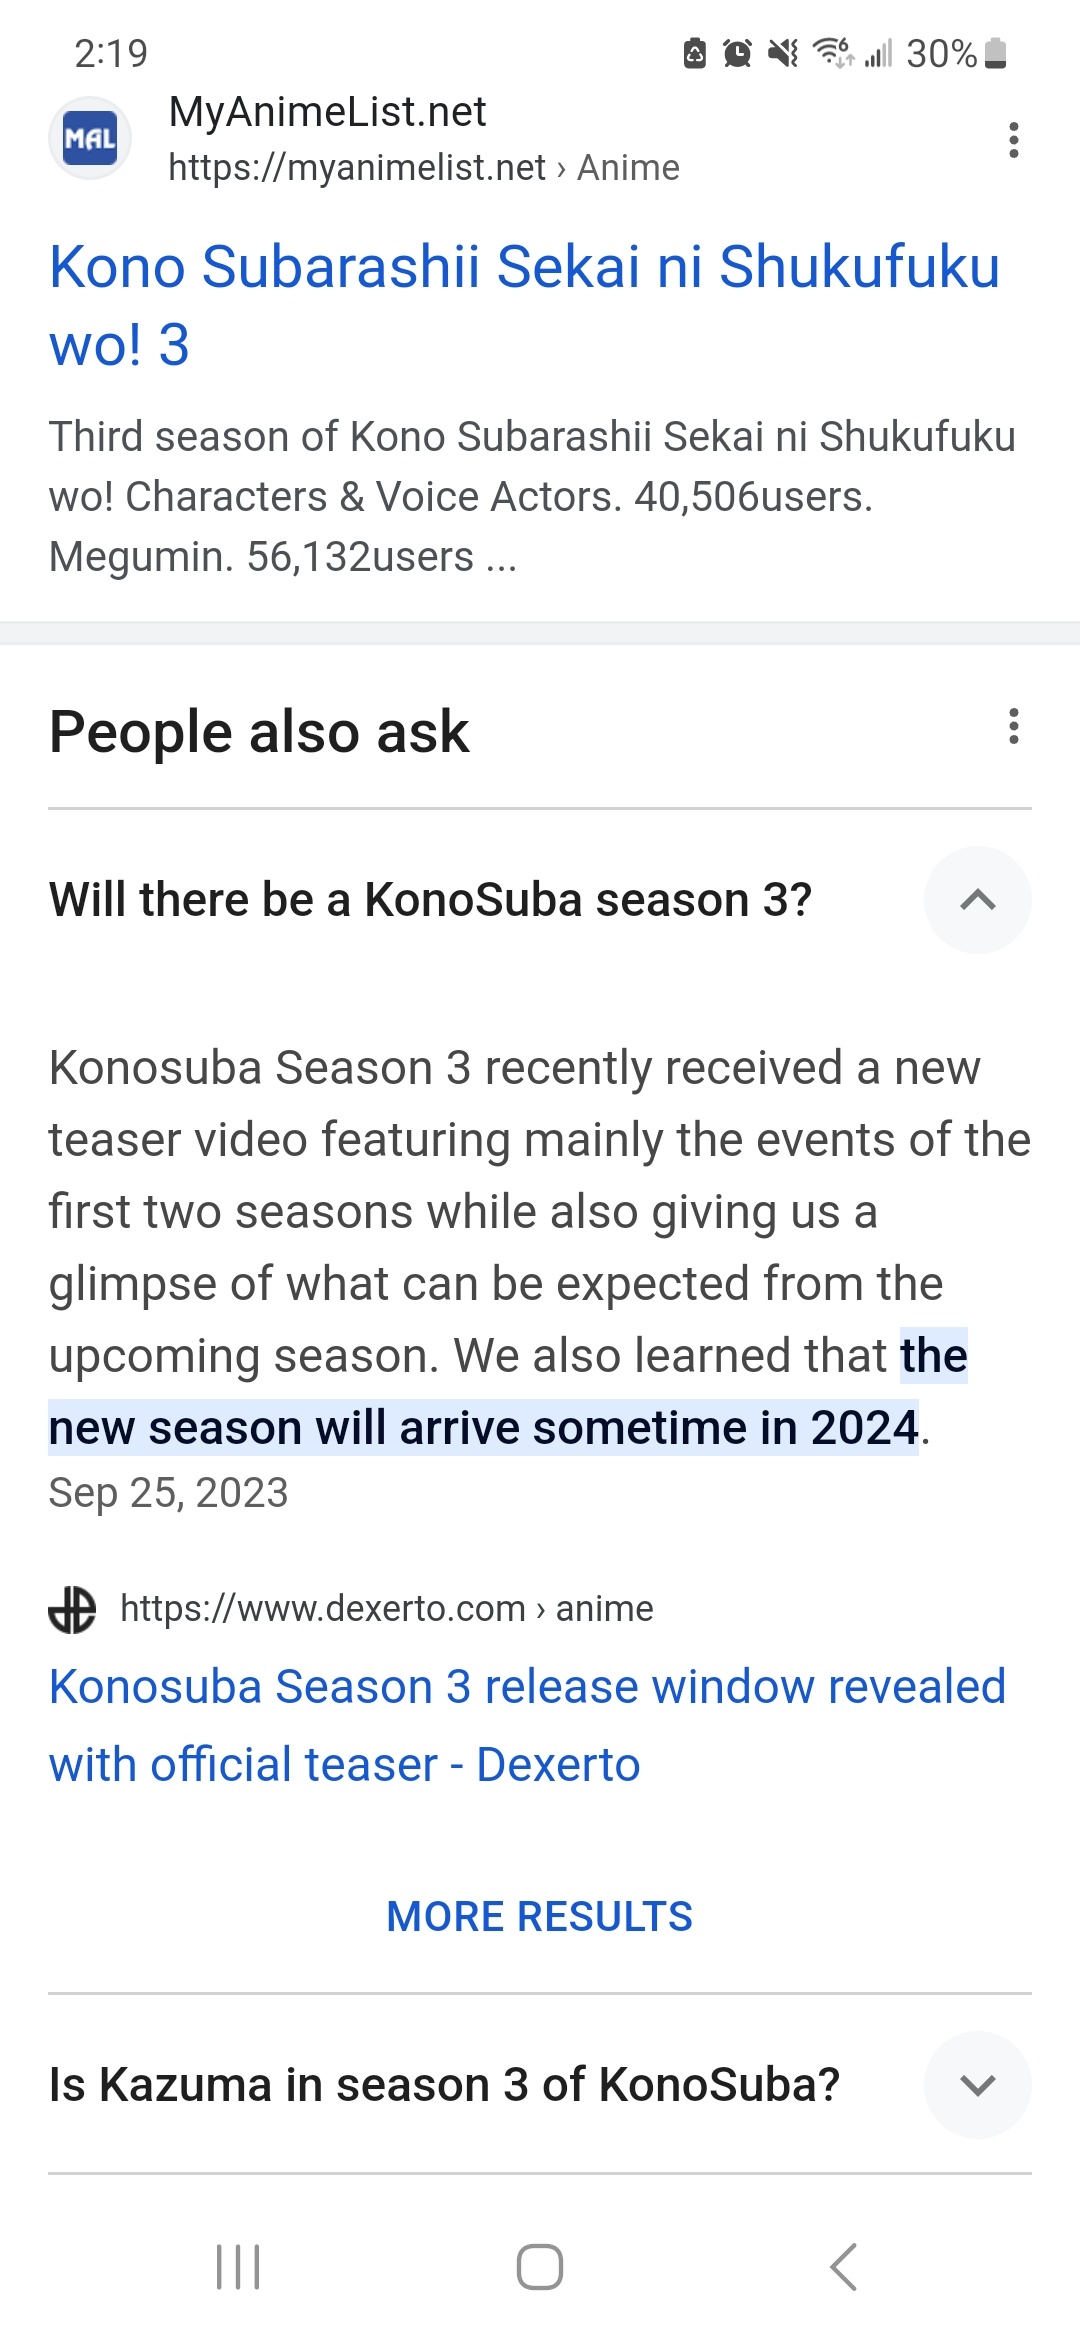 Konosuba Season 3 release window revealed with official teaser - Dexerto